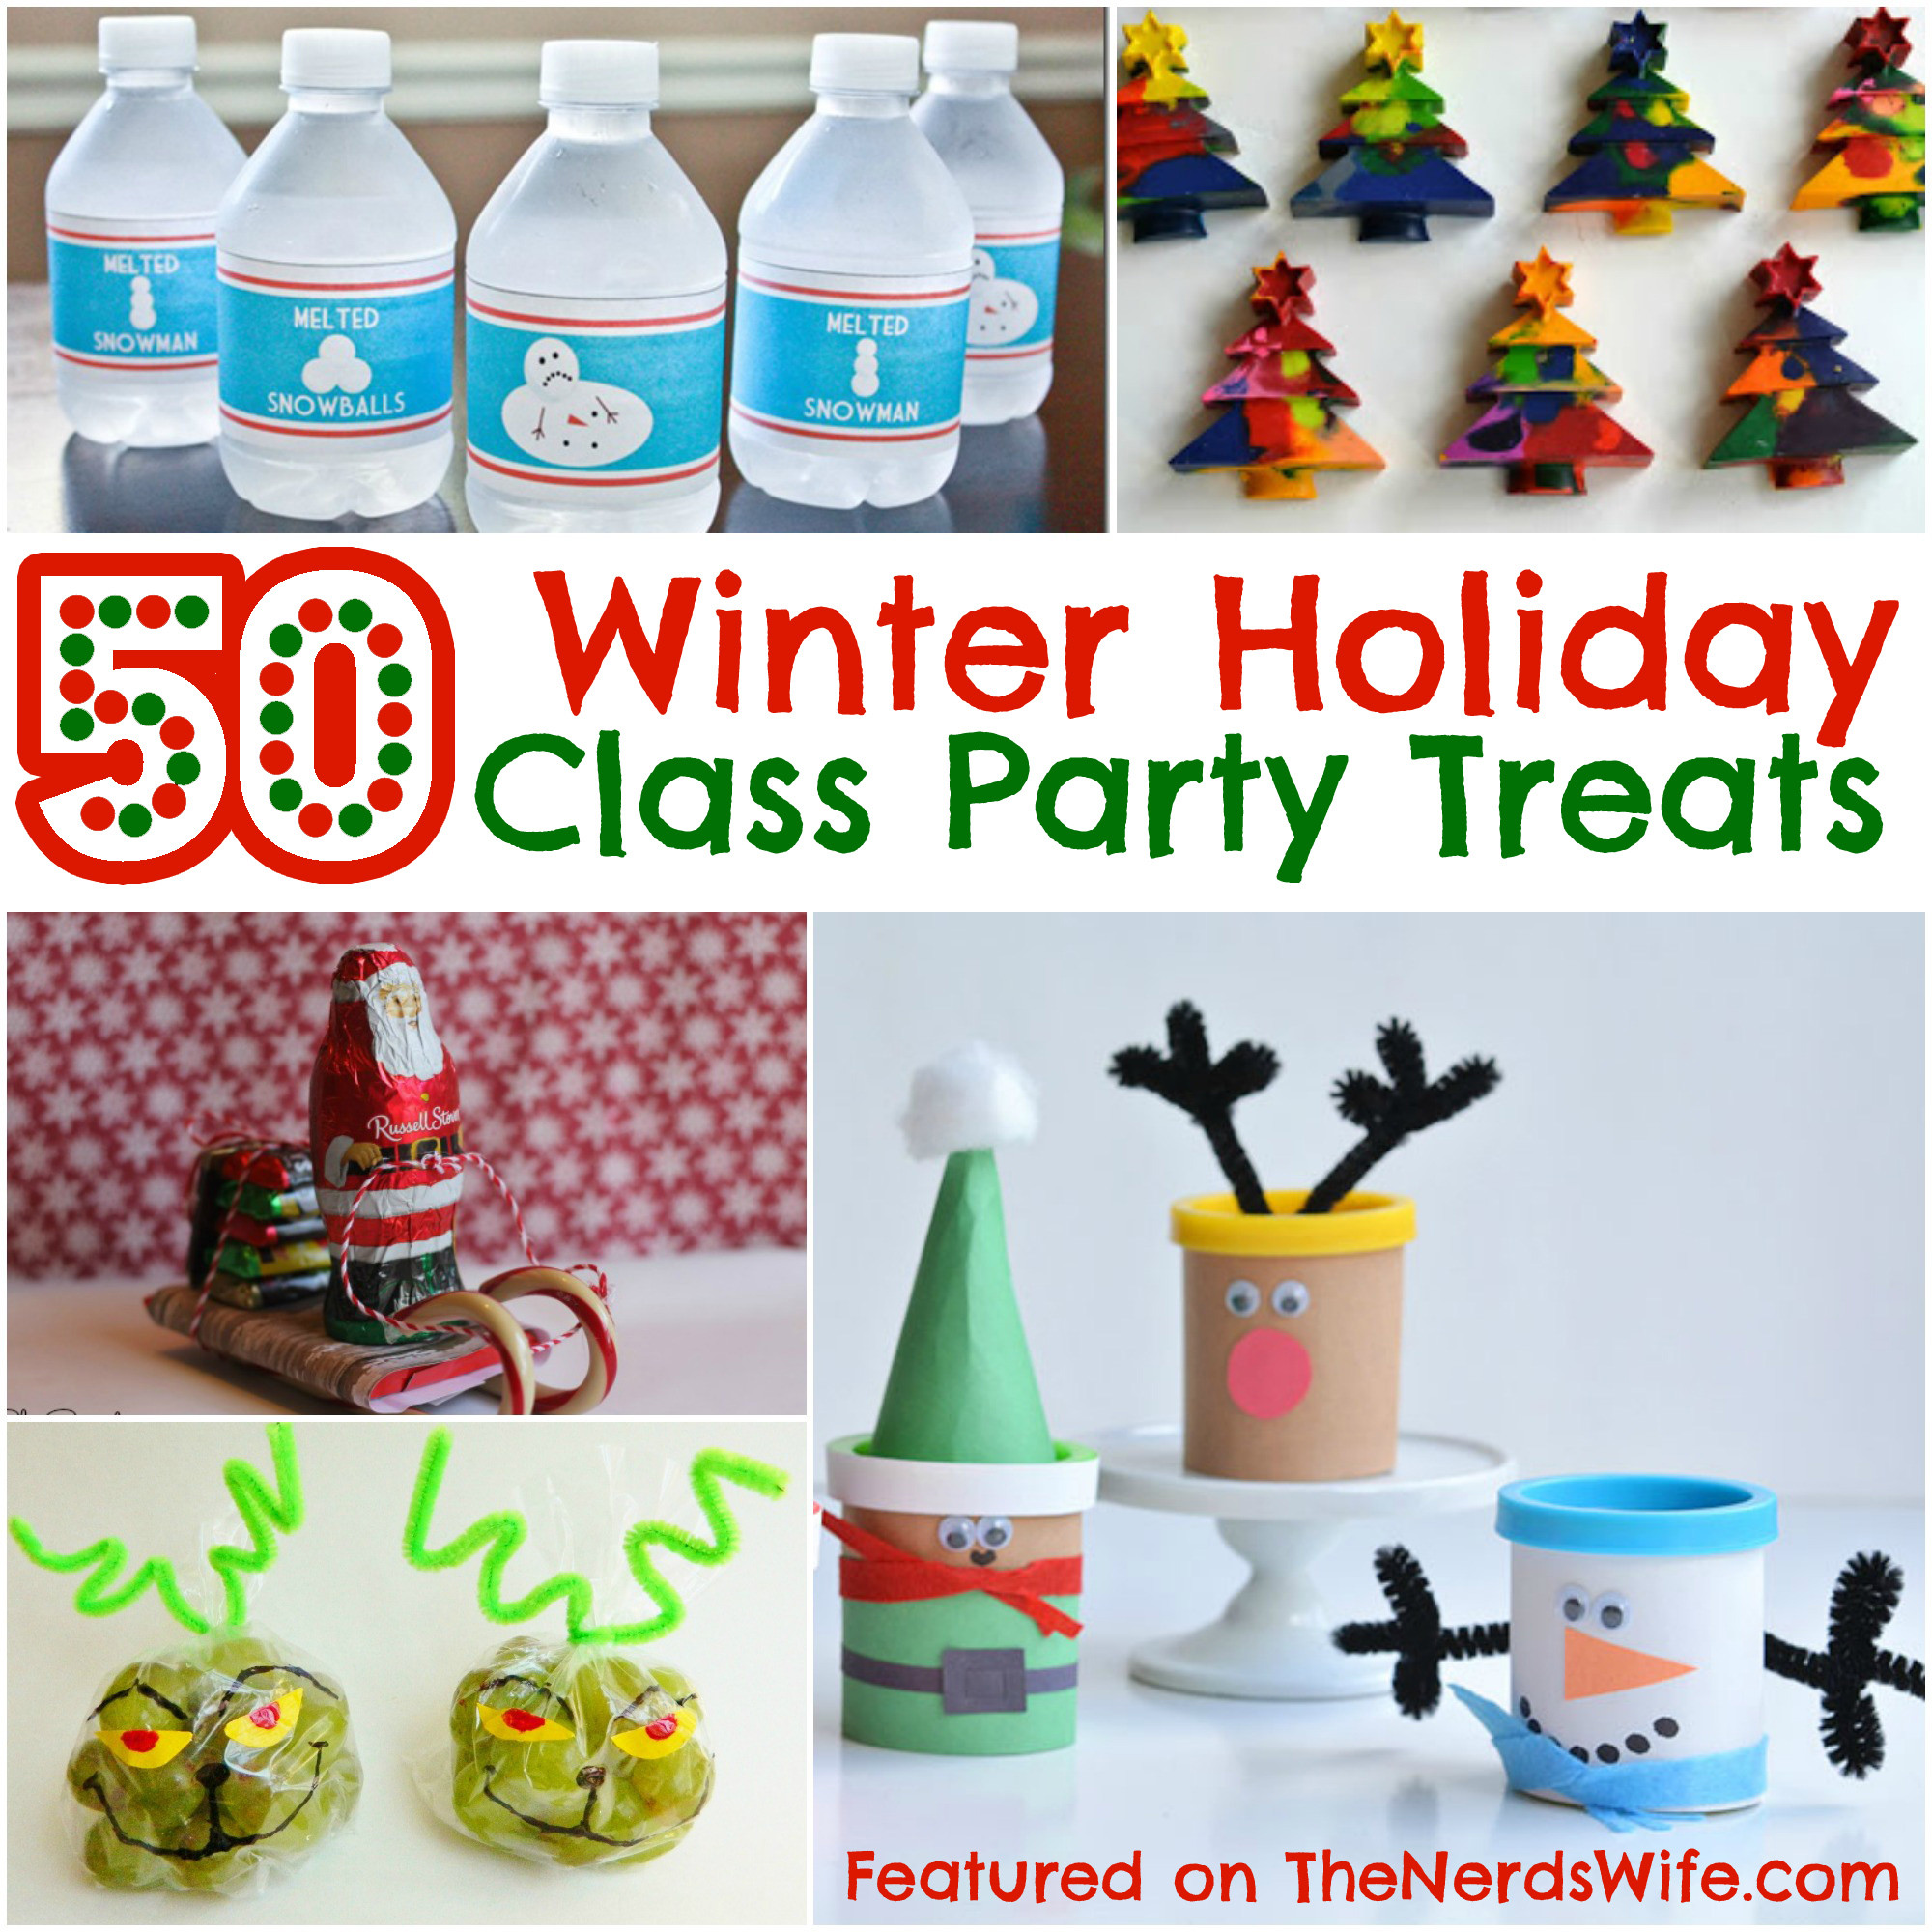 Winter Holiday Party Ideas
 50 Winter Holiday Class Party Treats